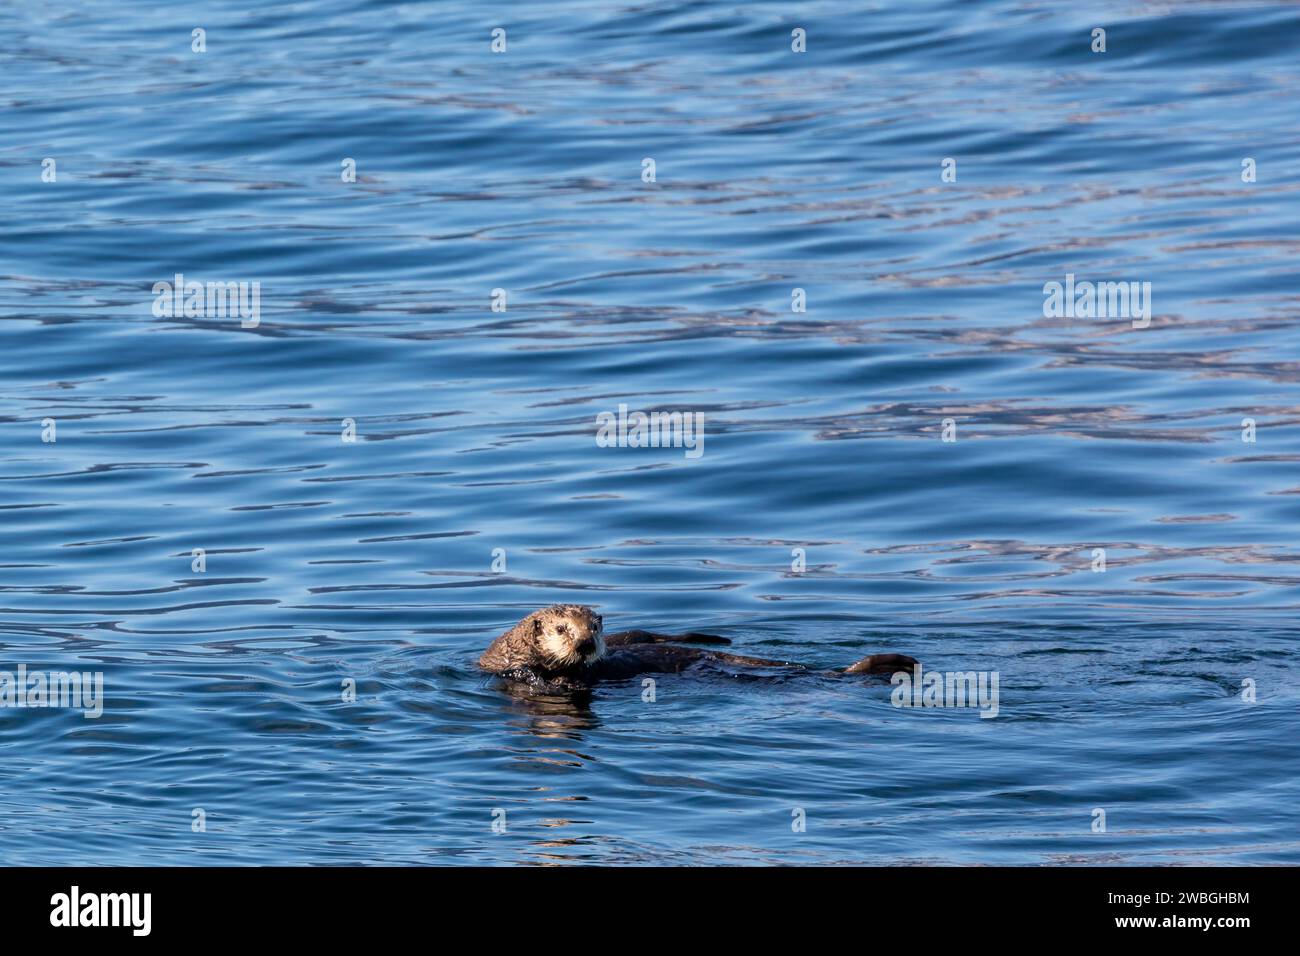 Sea otter, Enhydra lutris, floating in deep blue waters Stock Photo